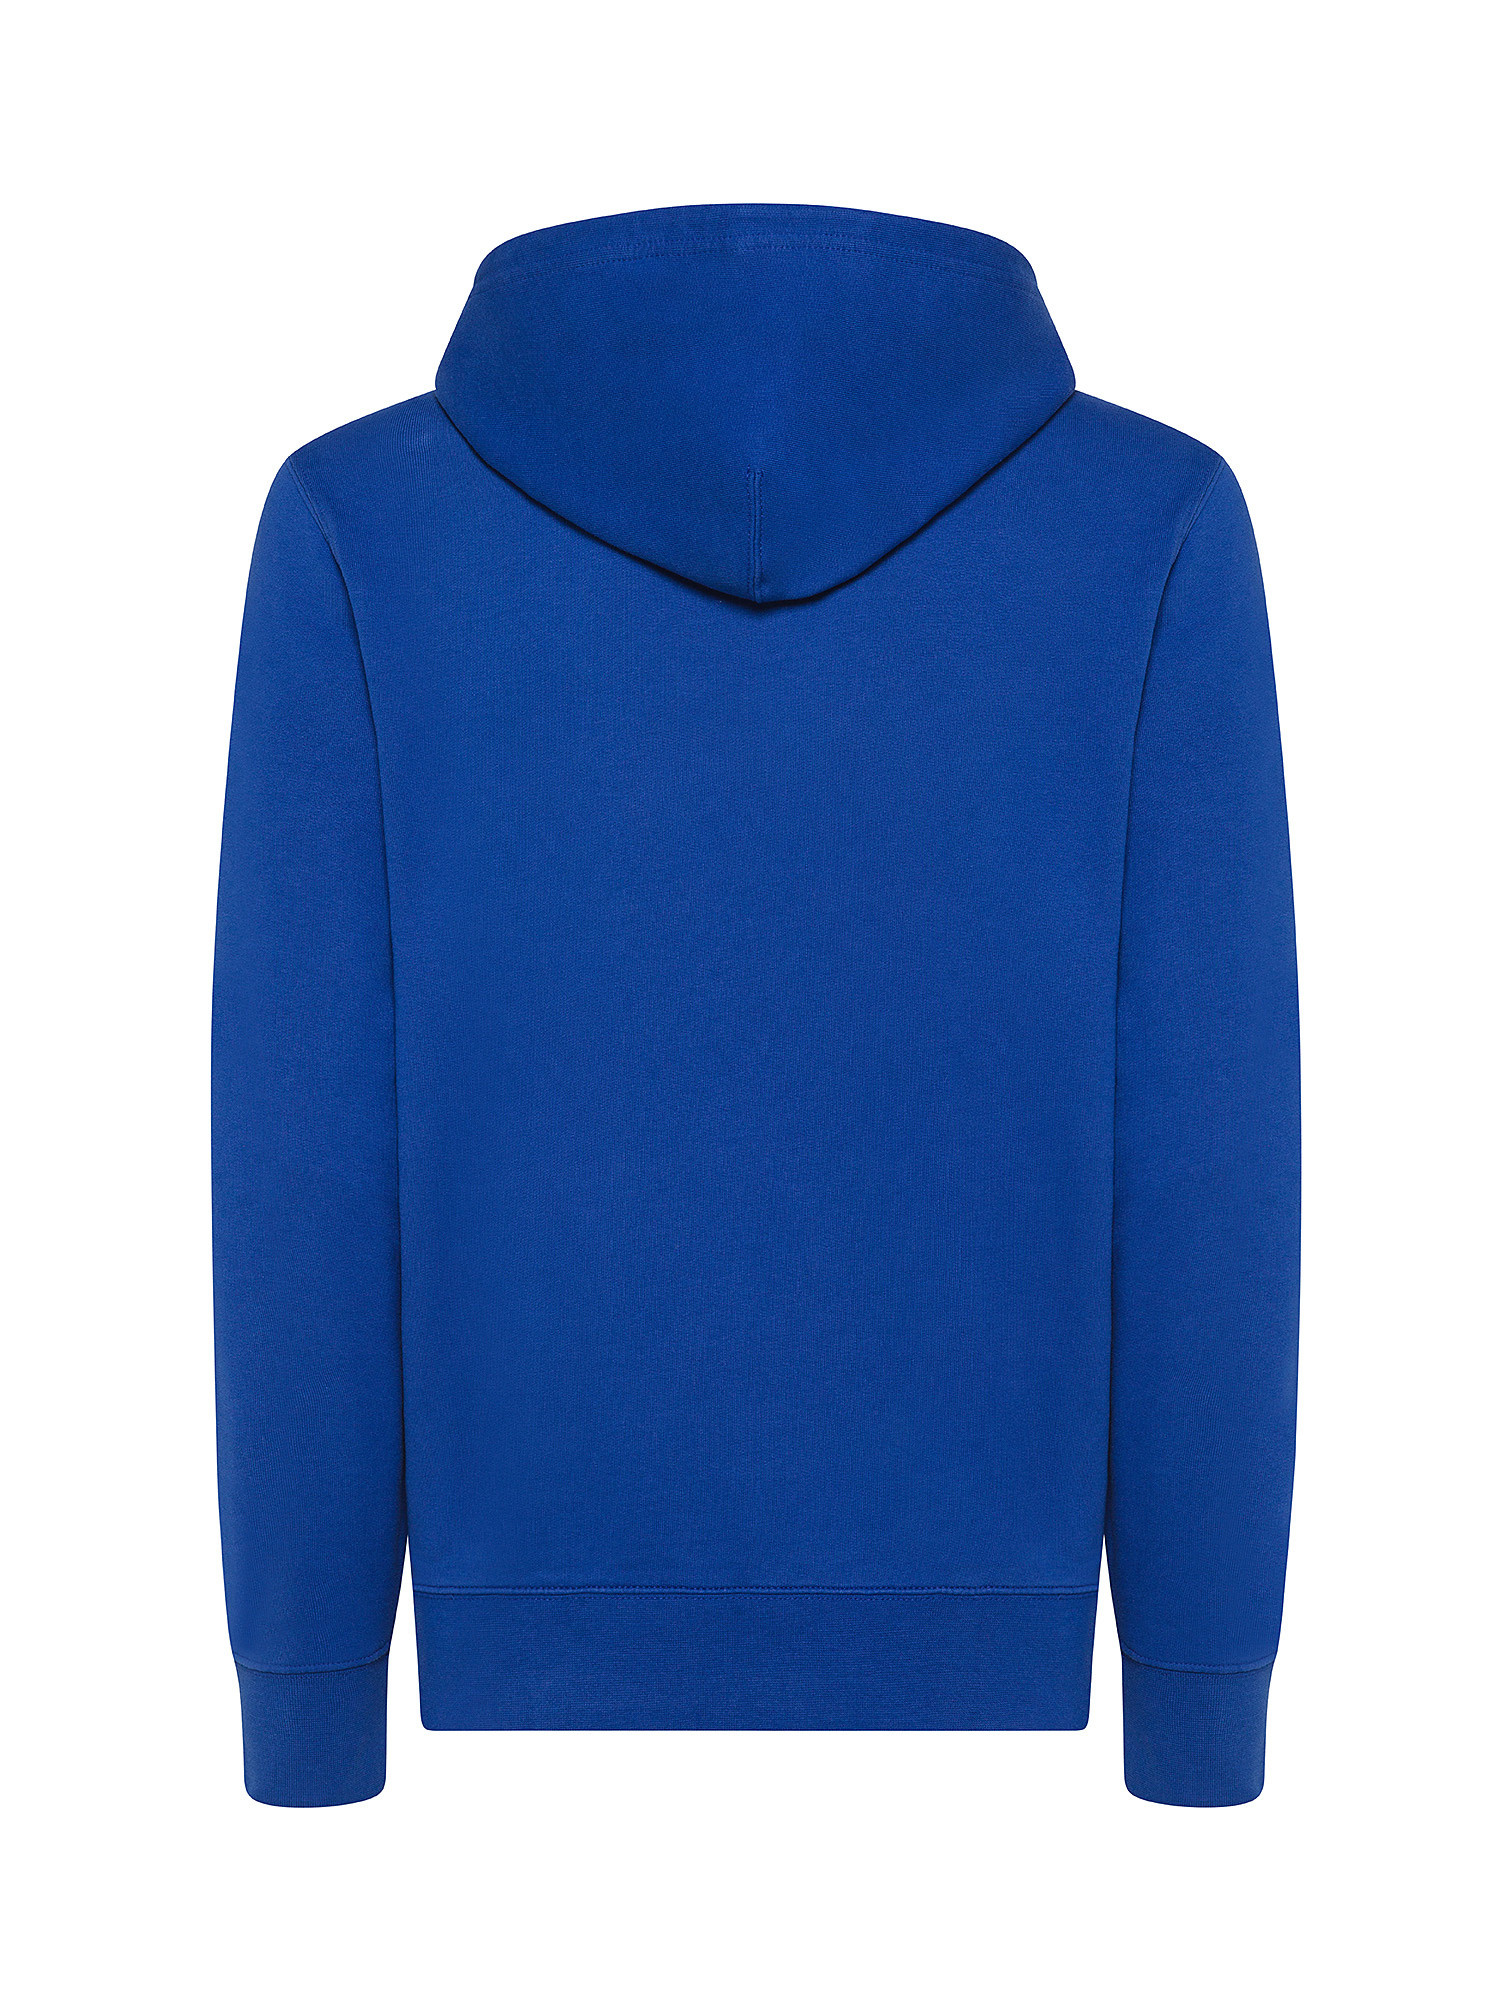 Levi's - Cotton hooded sweatshirt, Royal Blue, large image number 1